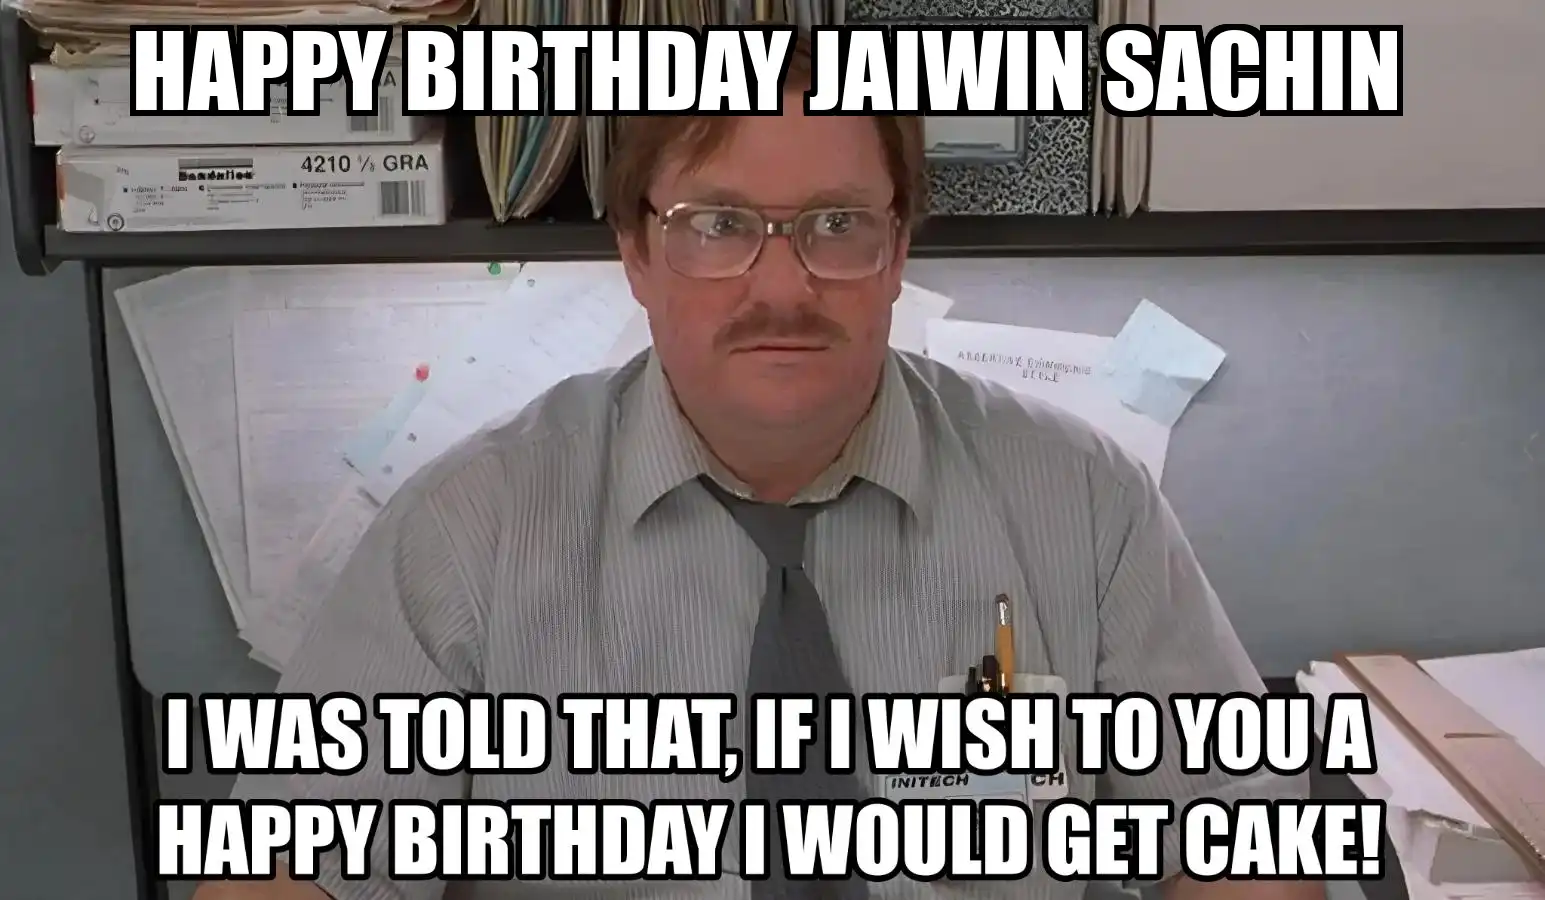 Happy Birthday Jaiwin sachin I Would Get A Cake Meme